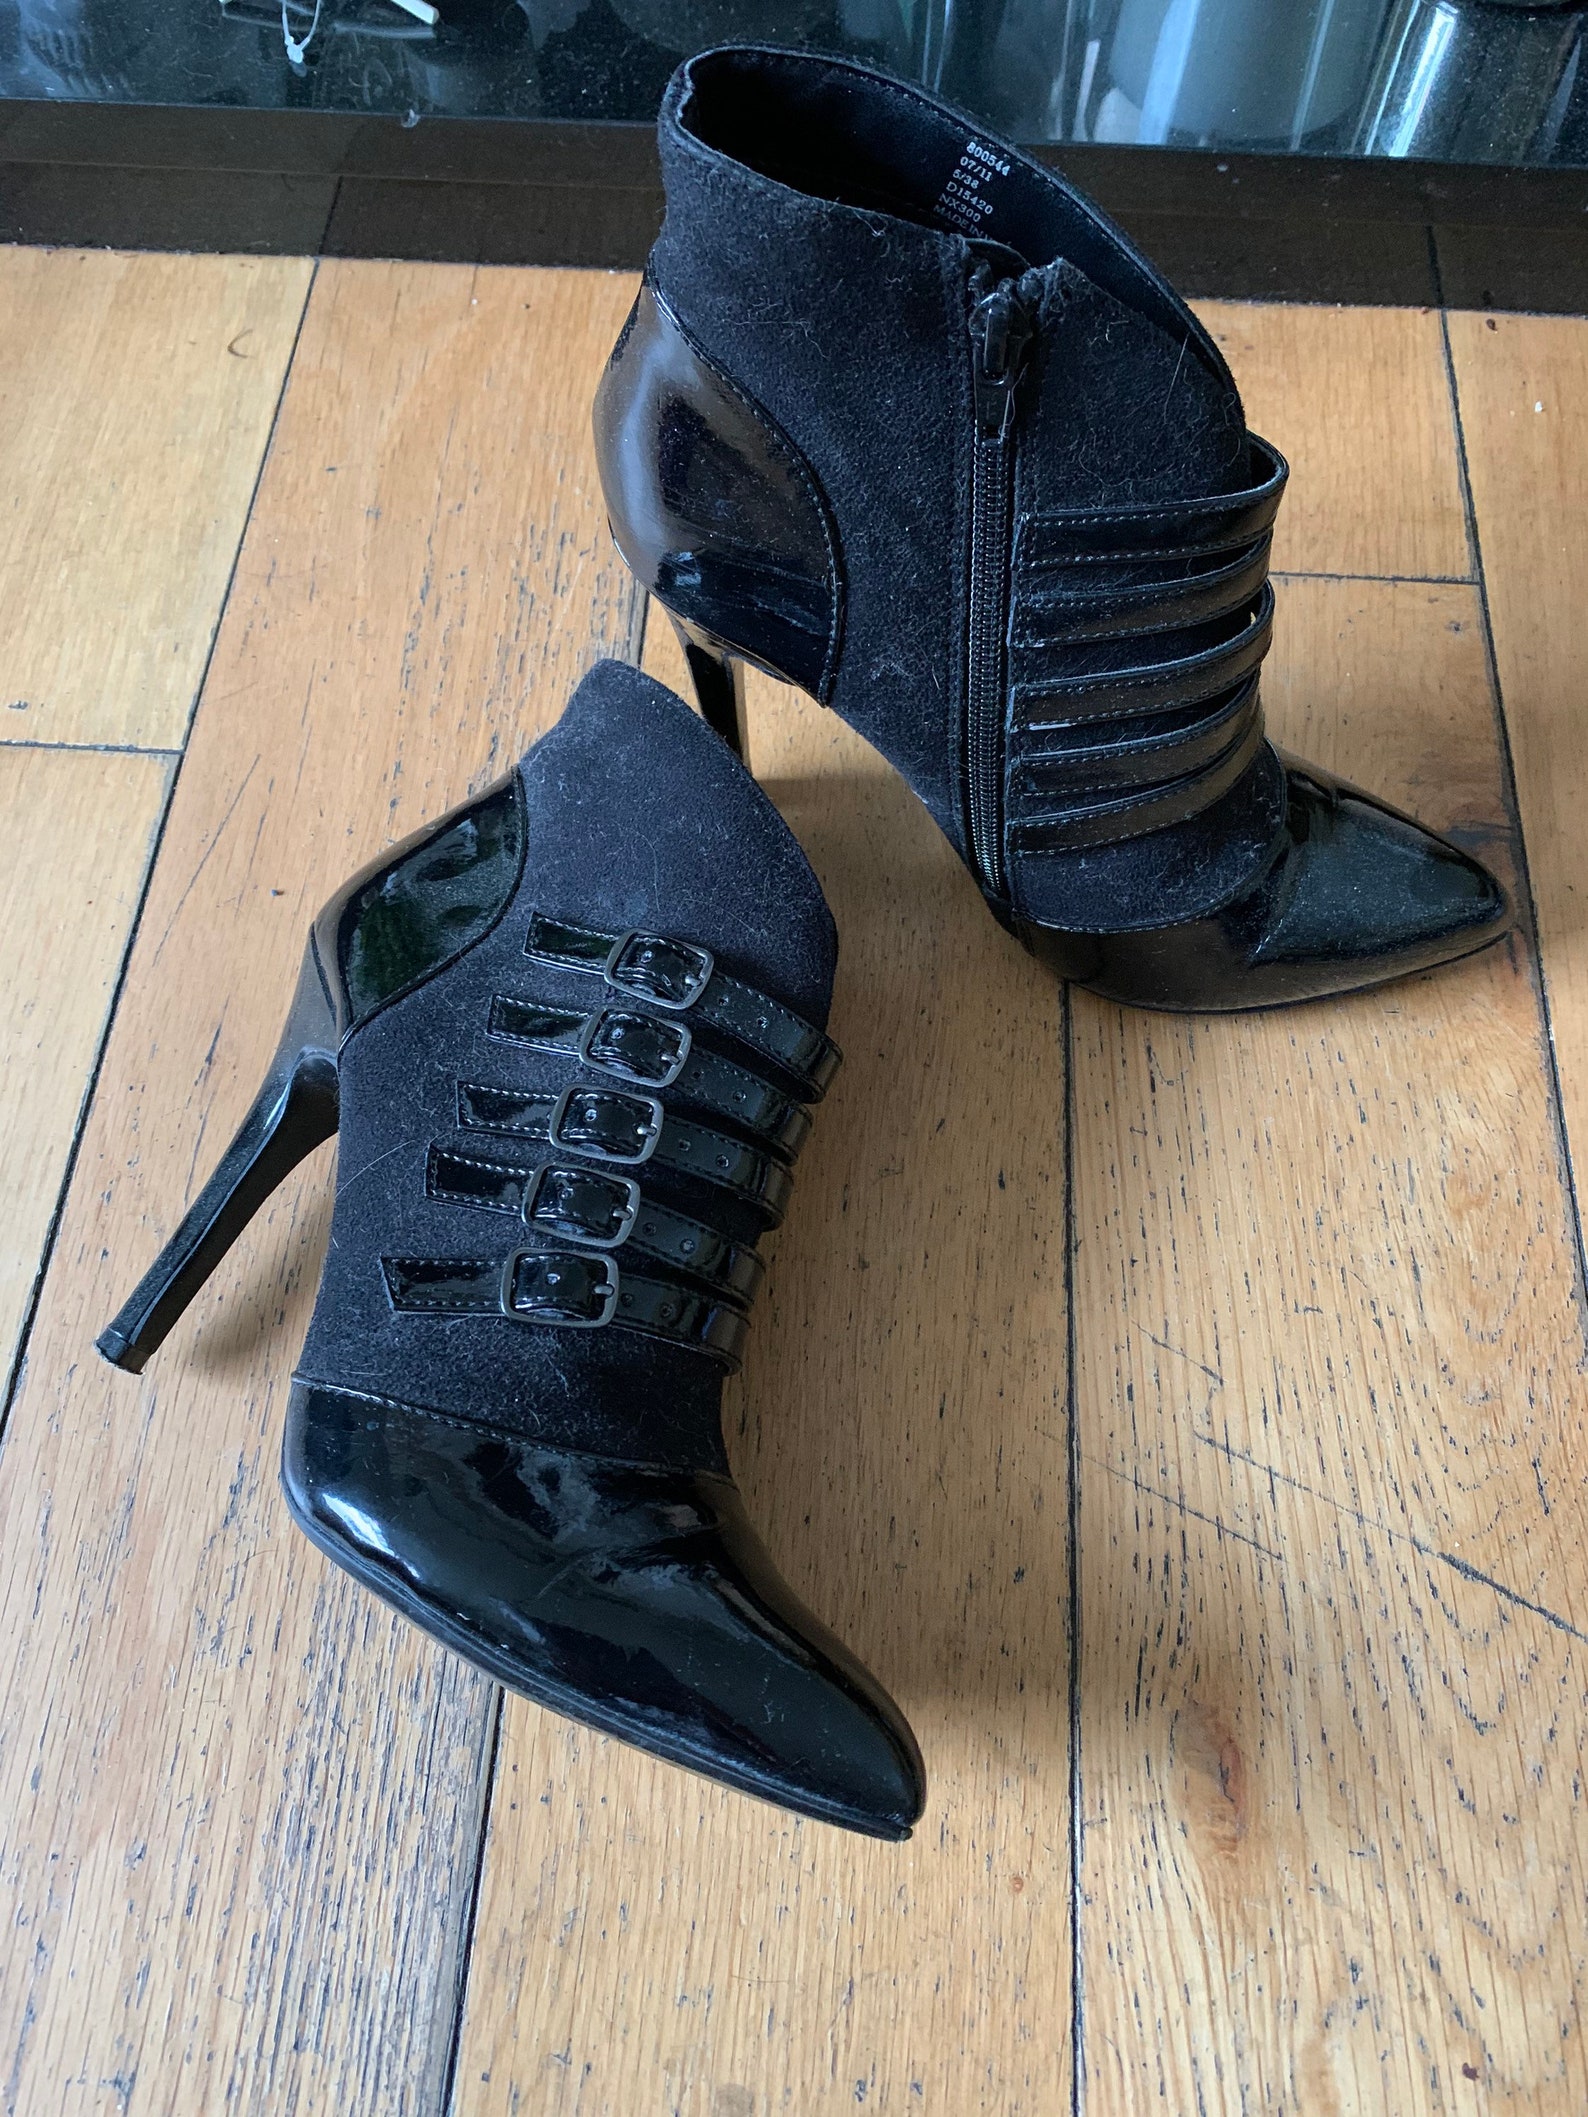 Dominatrix Shoes Fetish Wear Mistress Heels | Etsy